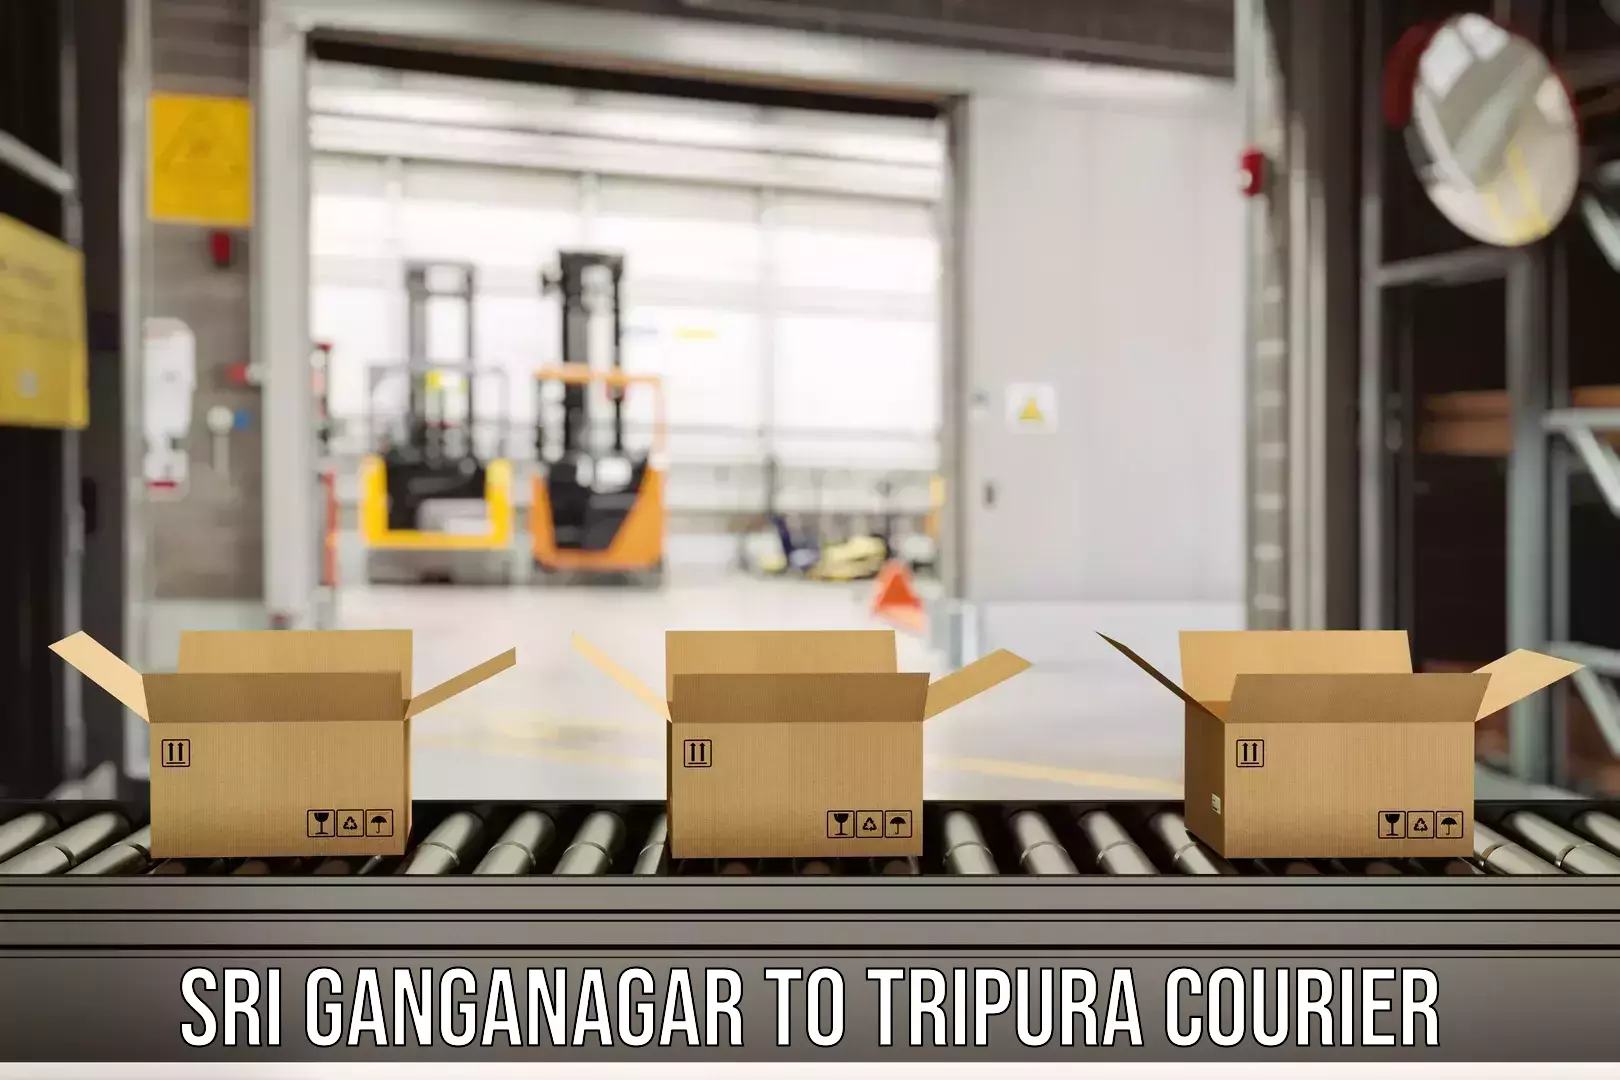 Express mail solutions Sri Ganganagar to Udaipur Tripura